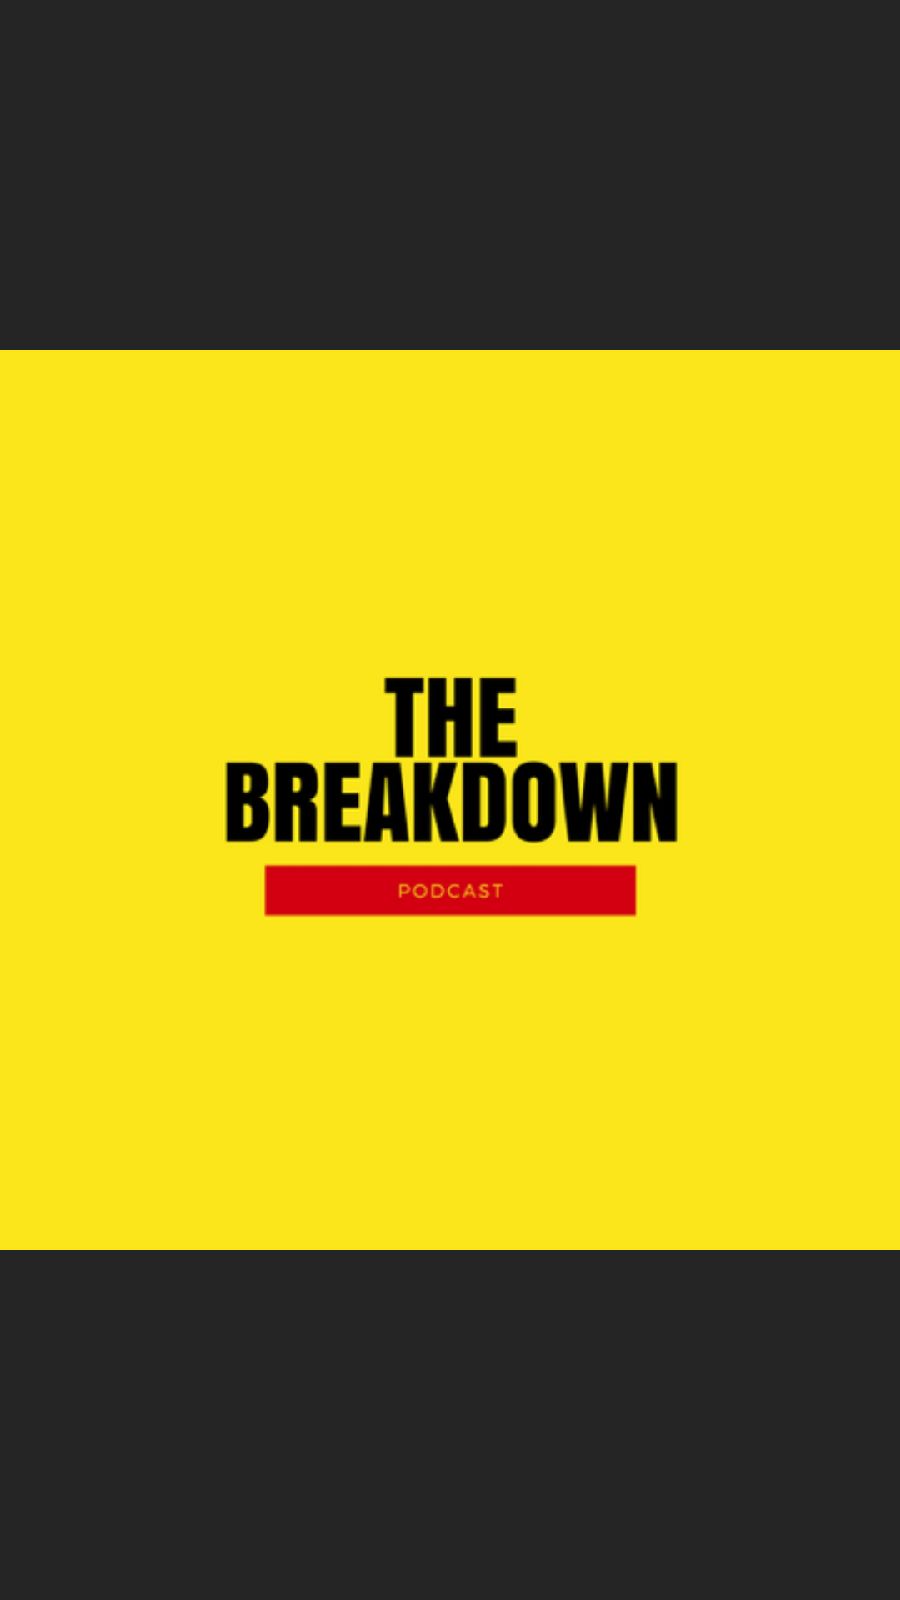 the breakdown podcast logo